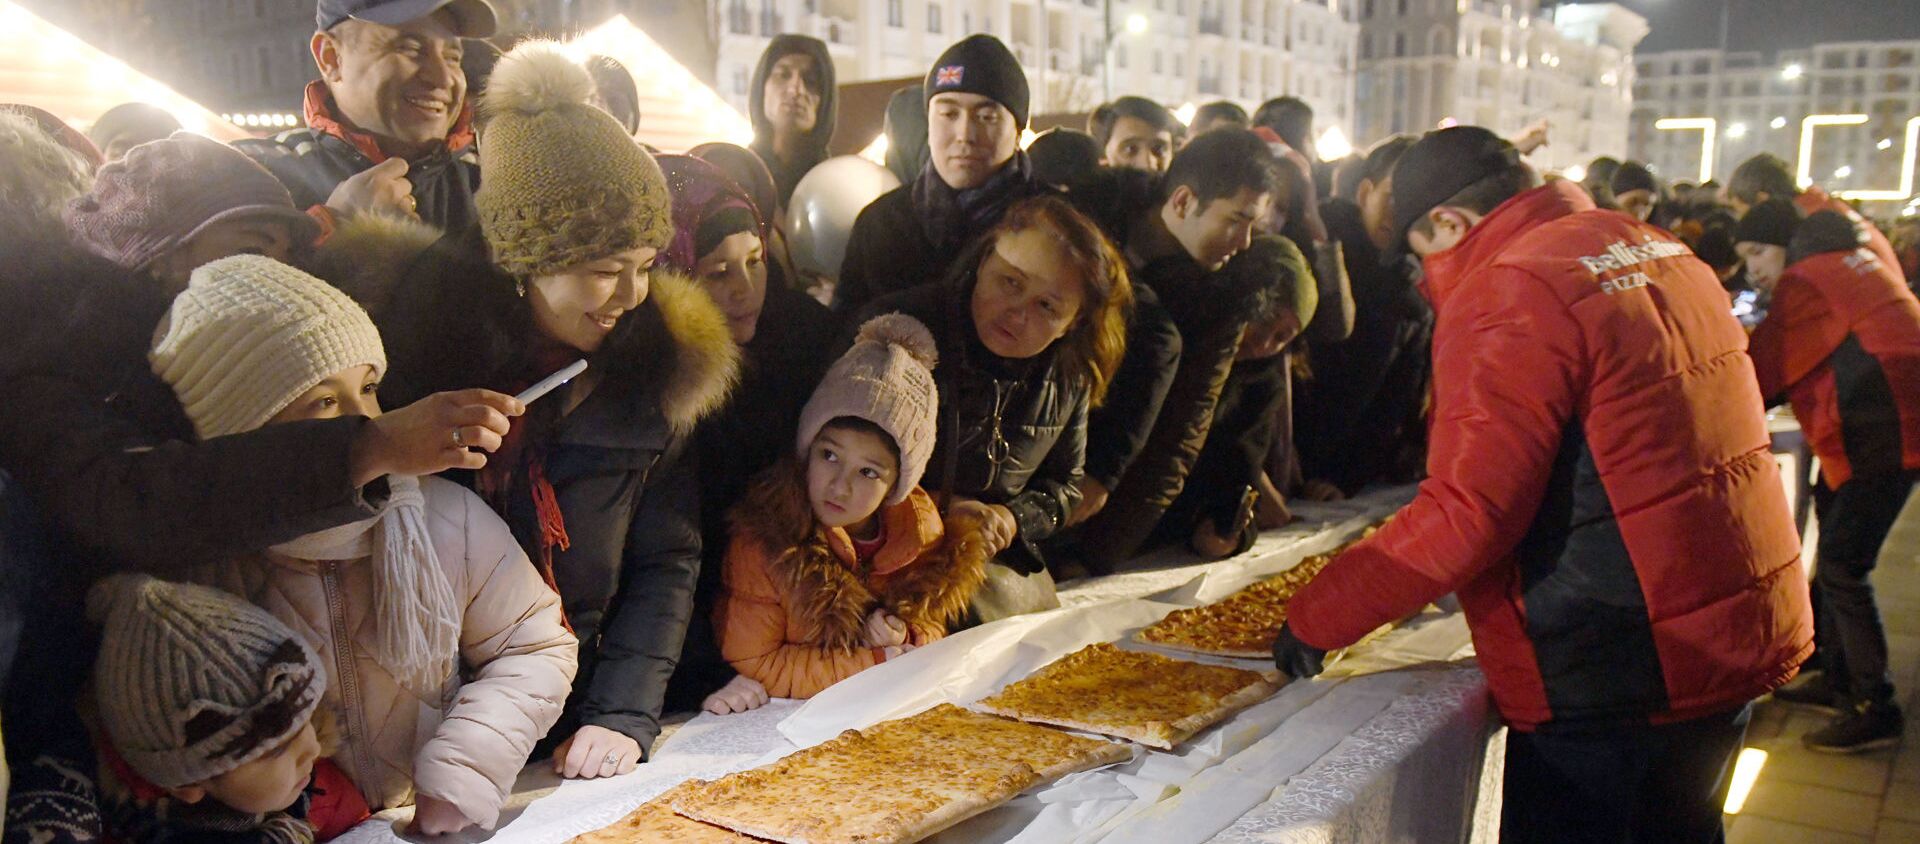 В Ташкенте испекли гигантскую пиццу, хватило всем — видео - Sputnik Узбекистан, 1920, 15.12.2019